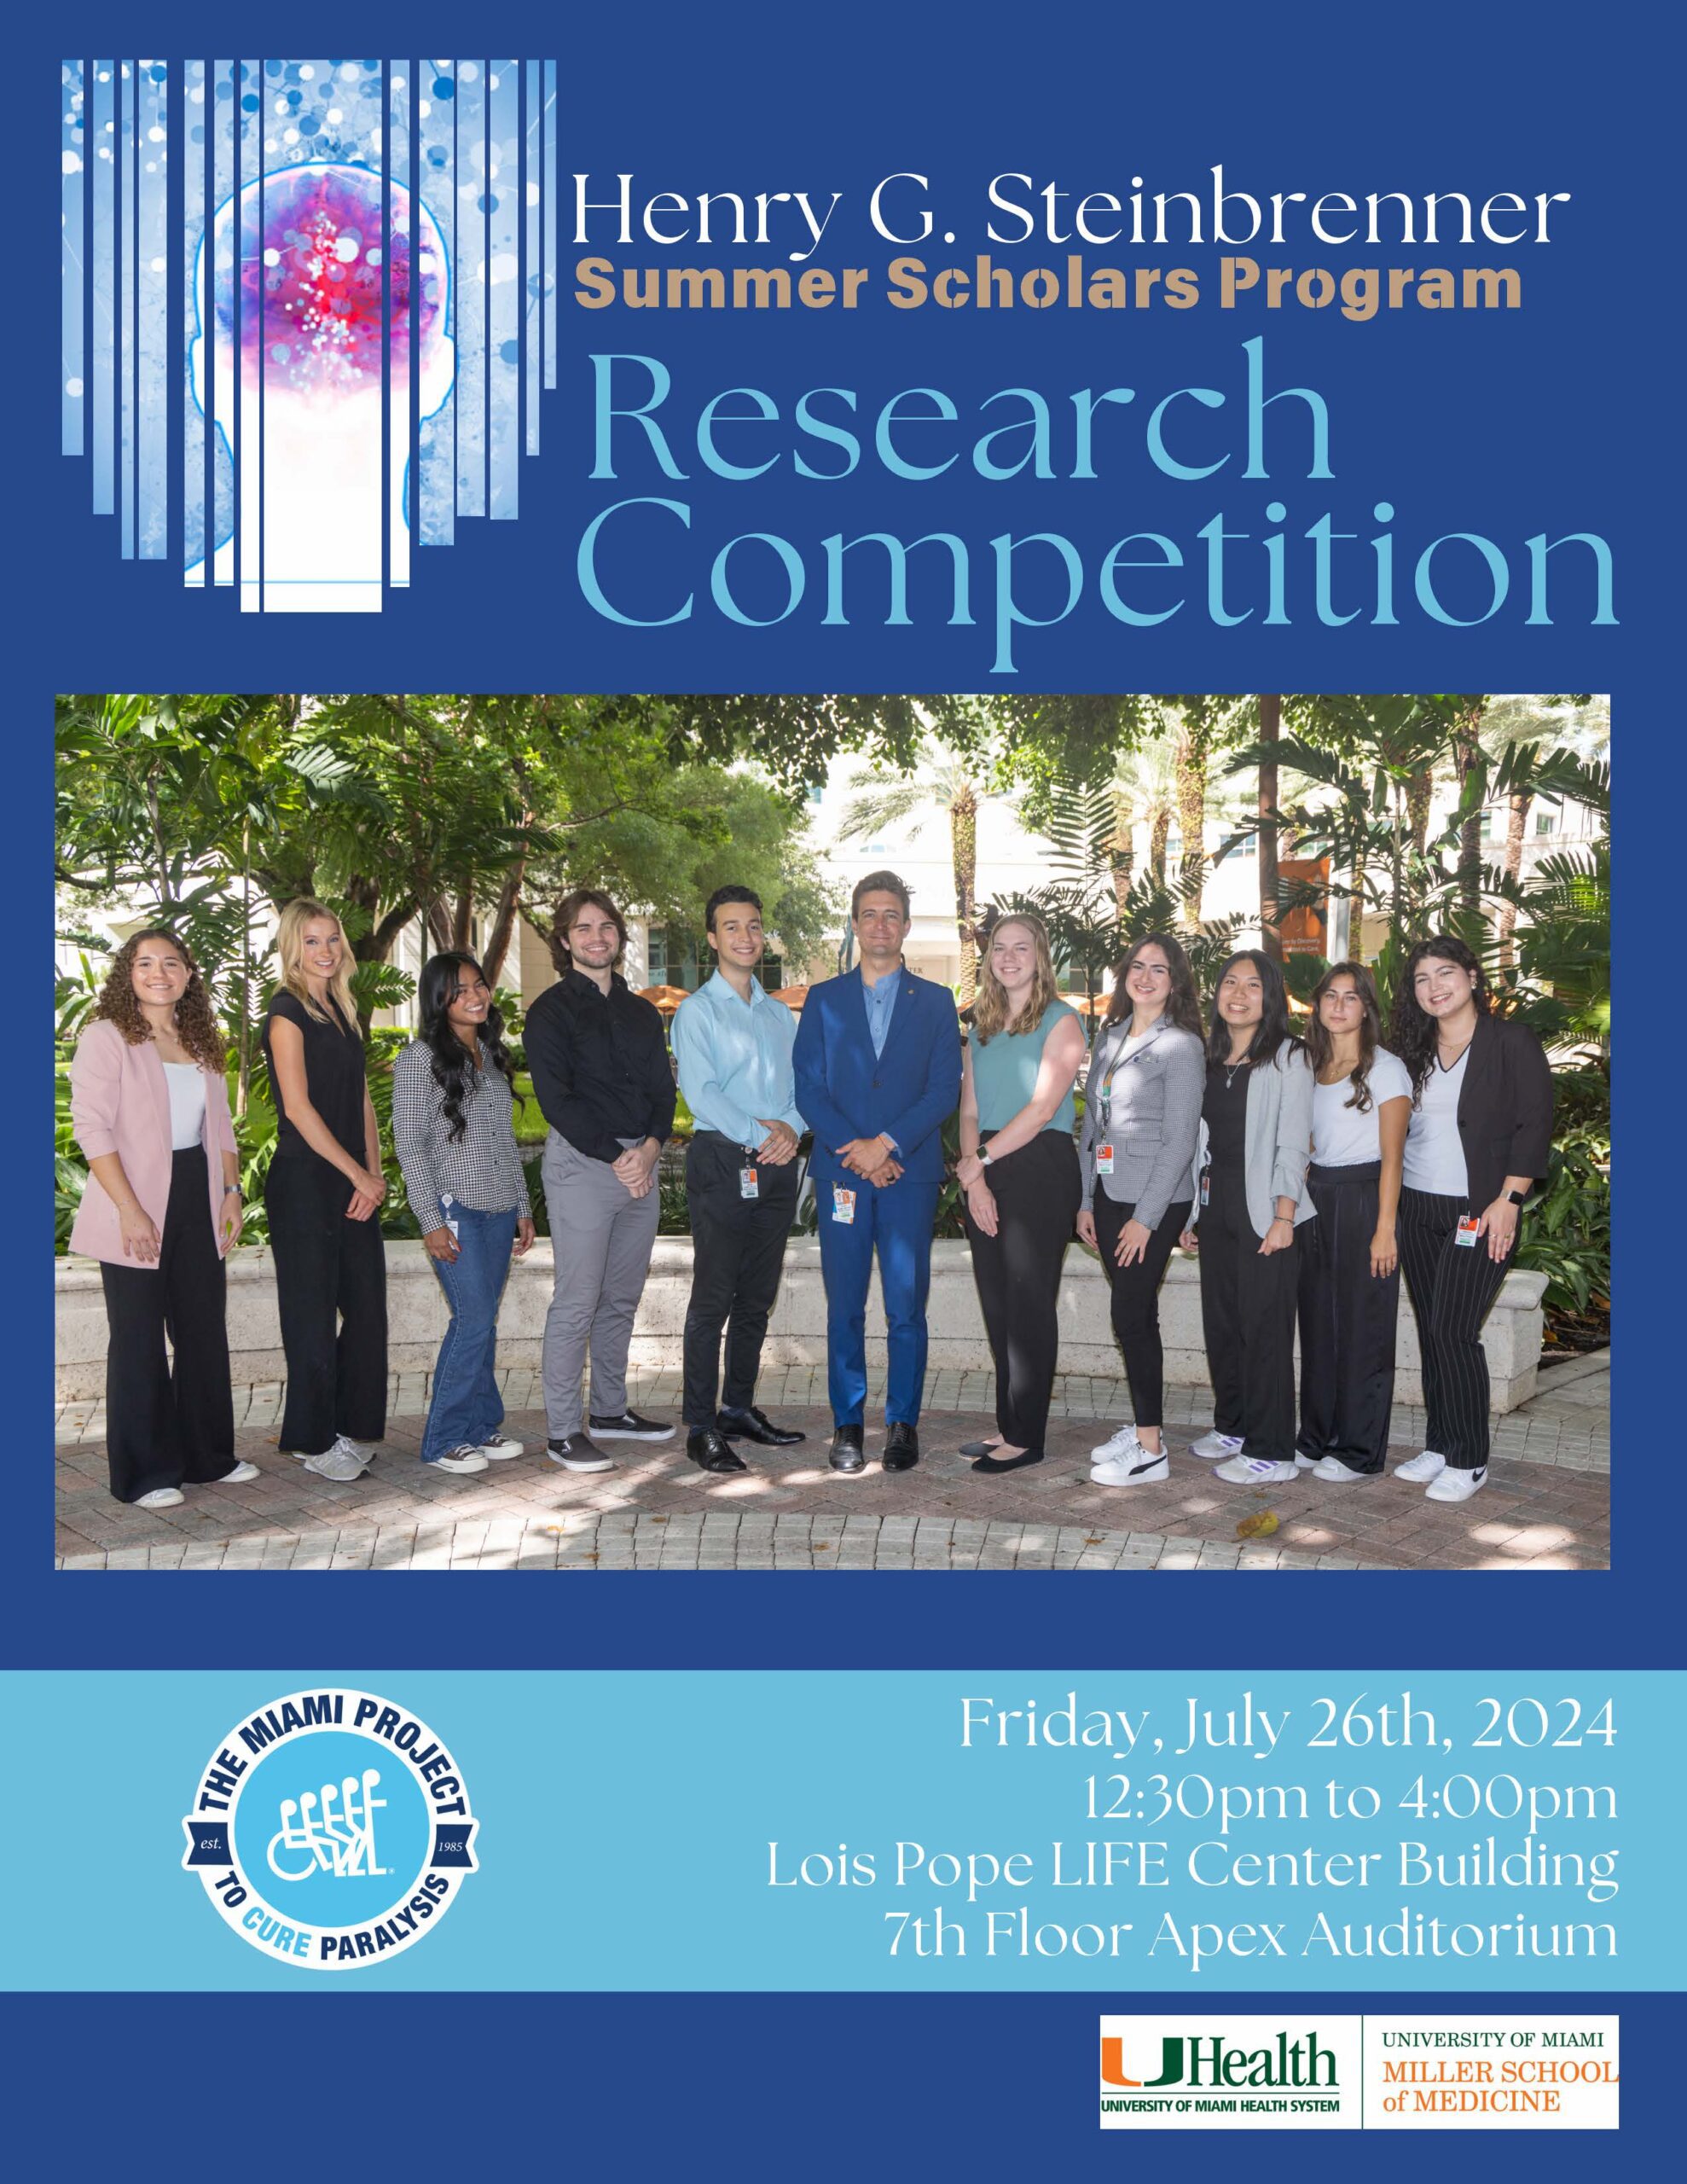 Henry G. Steinbrenner Summer Scholars Program Research Competition